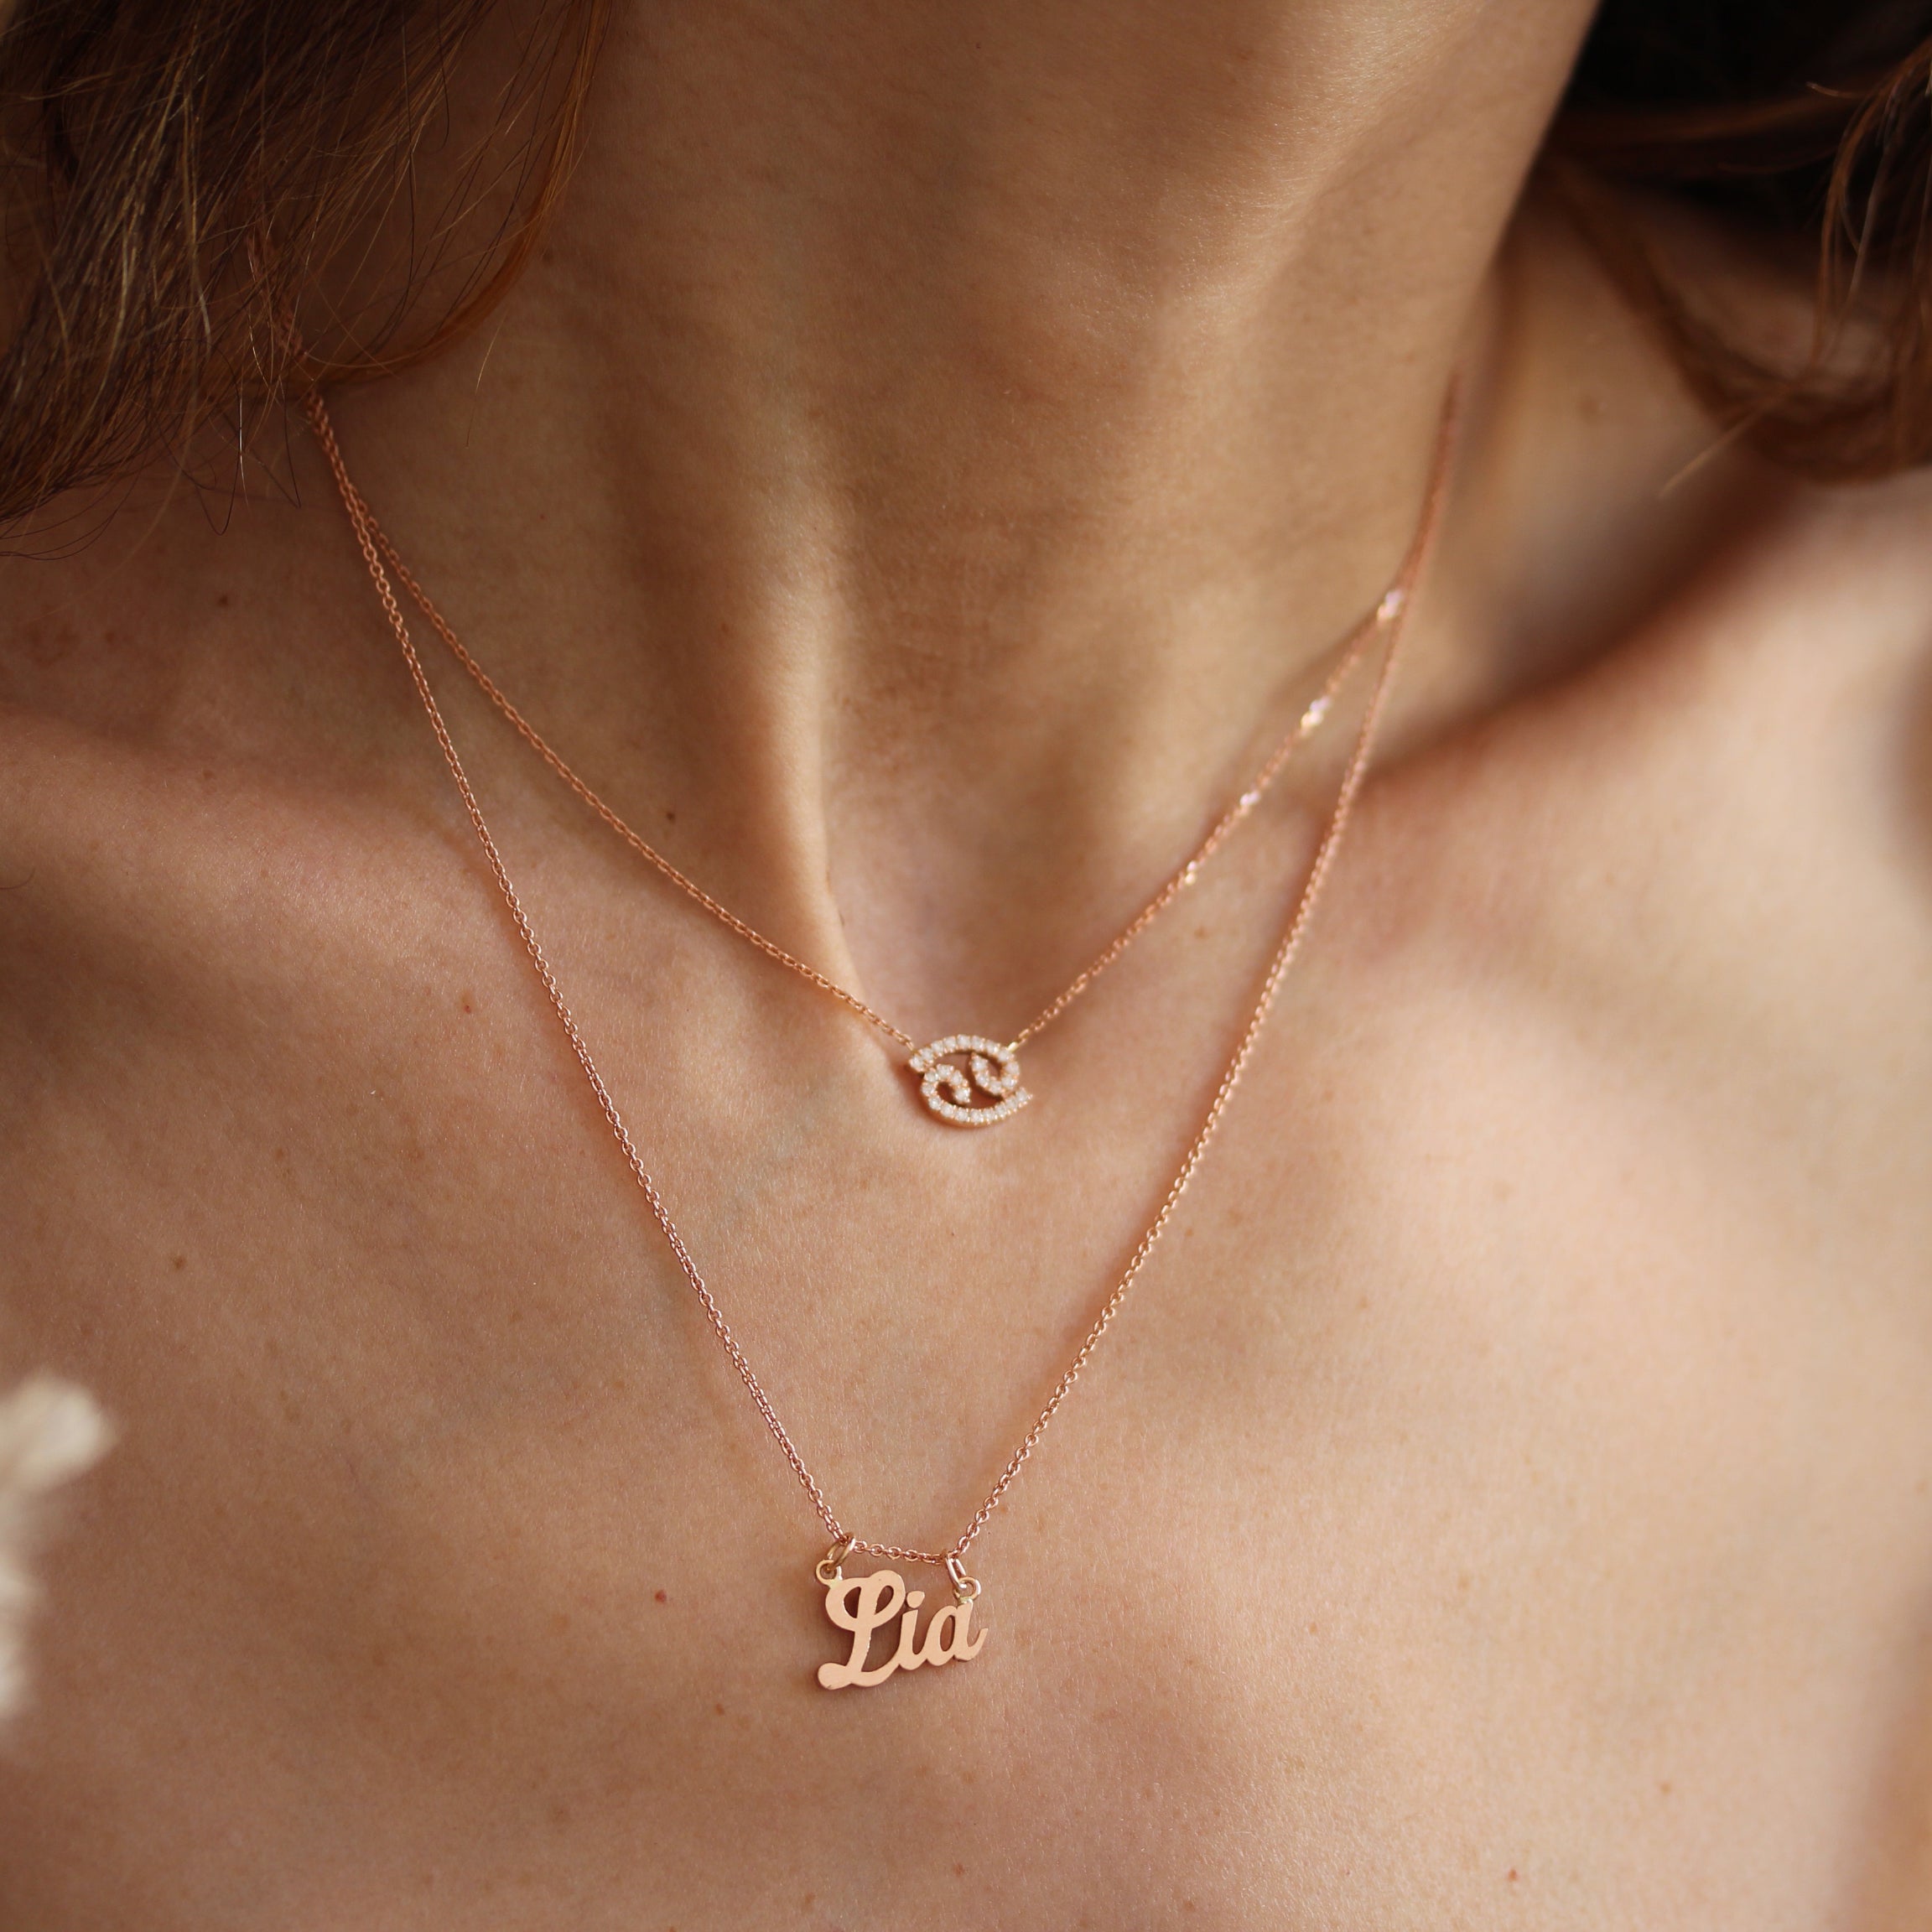 Phiten Titanium Chain Necklace Length 40 cm w/ Tracking NEW | eBay